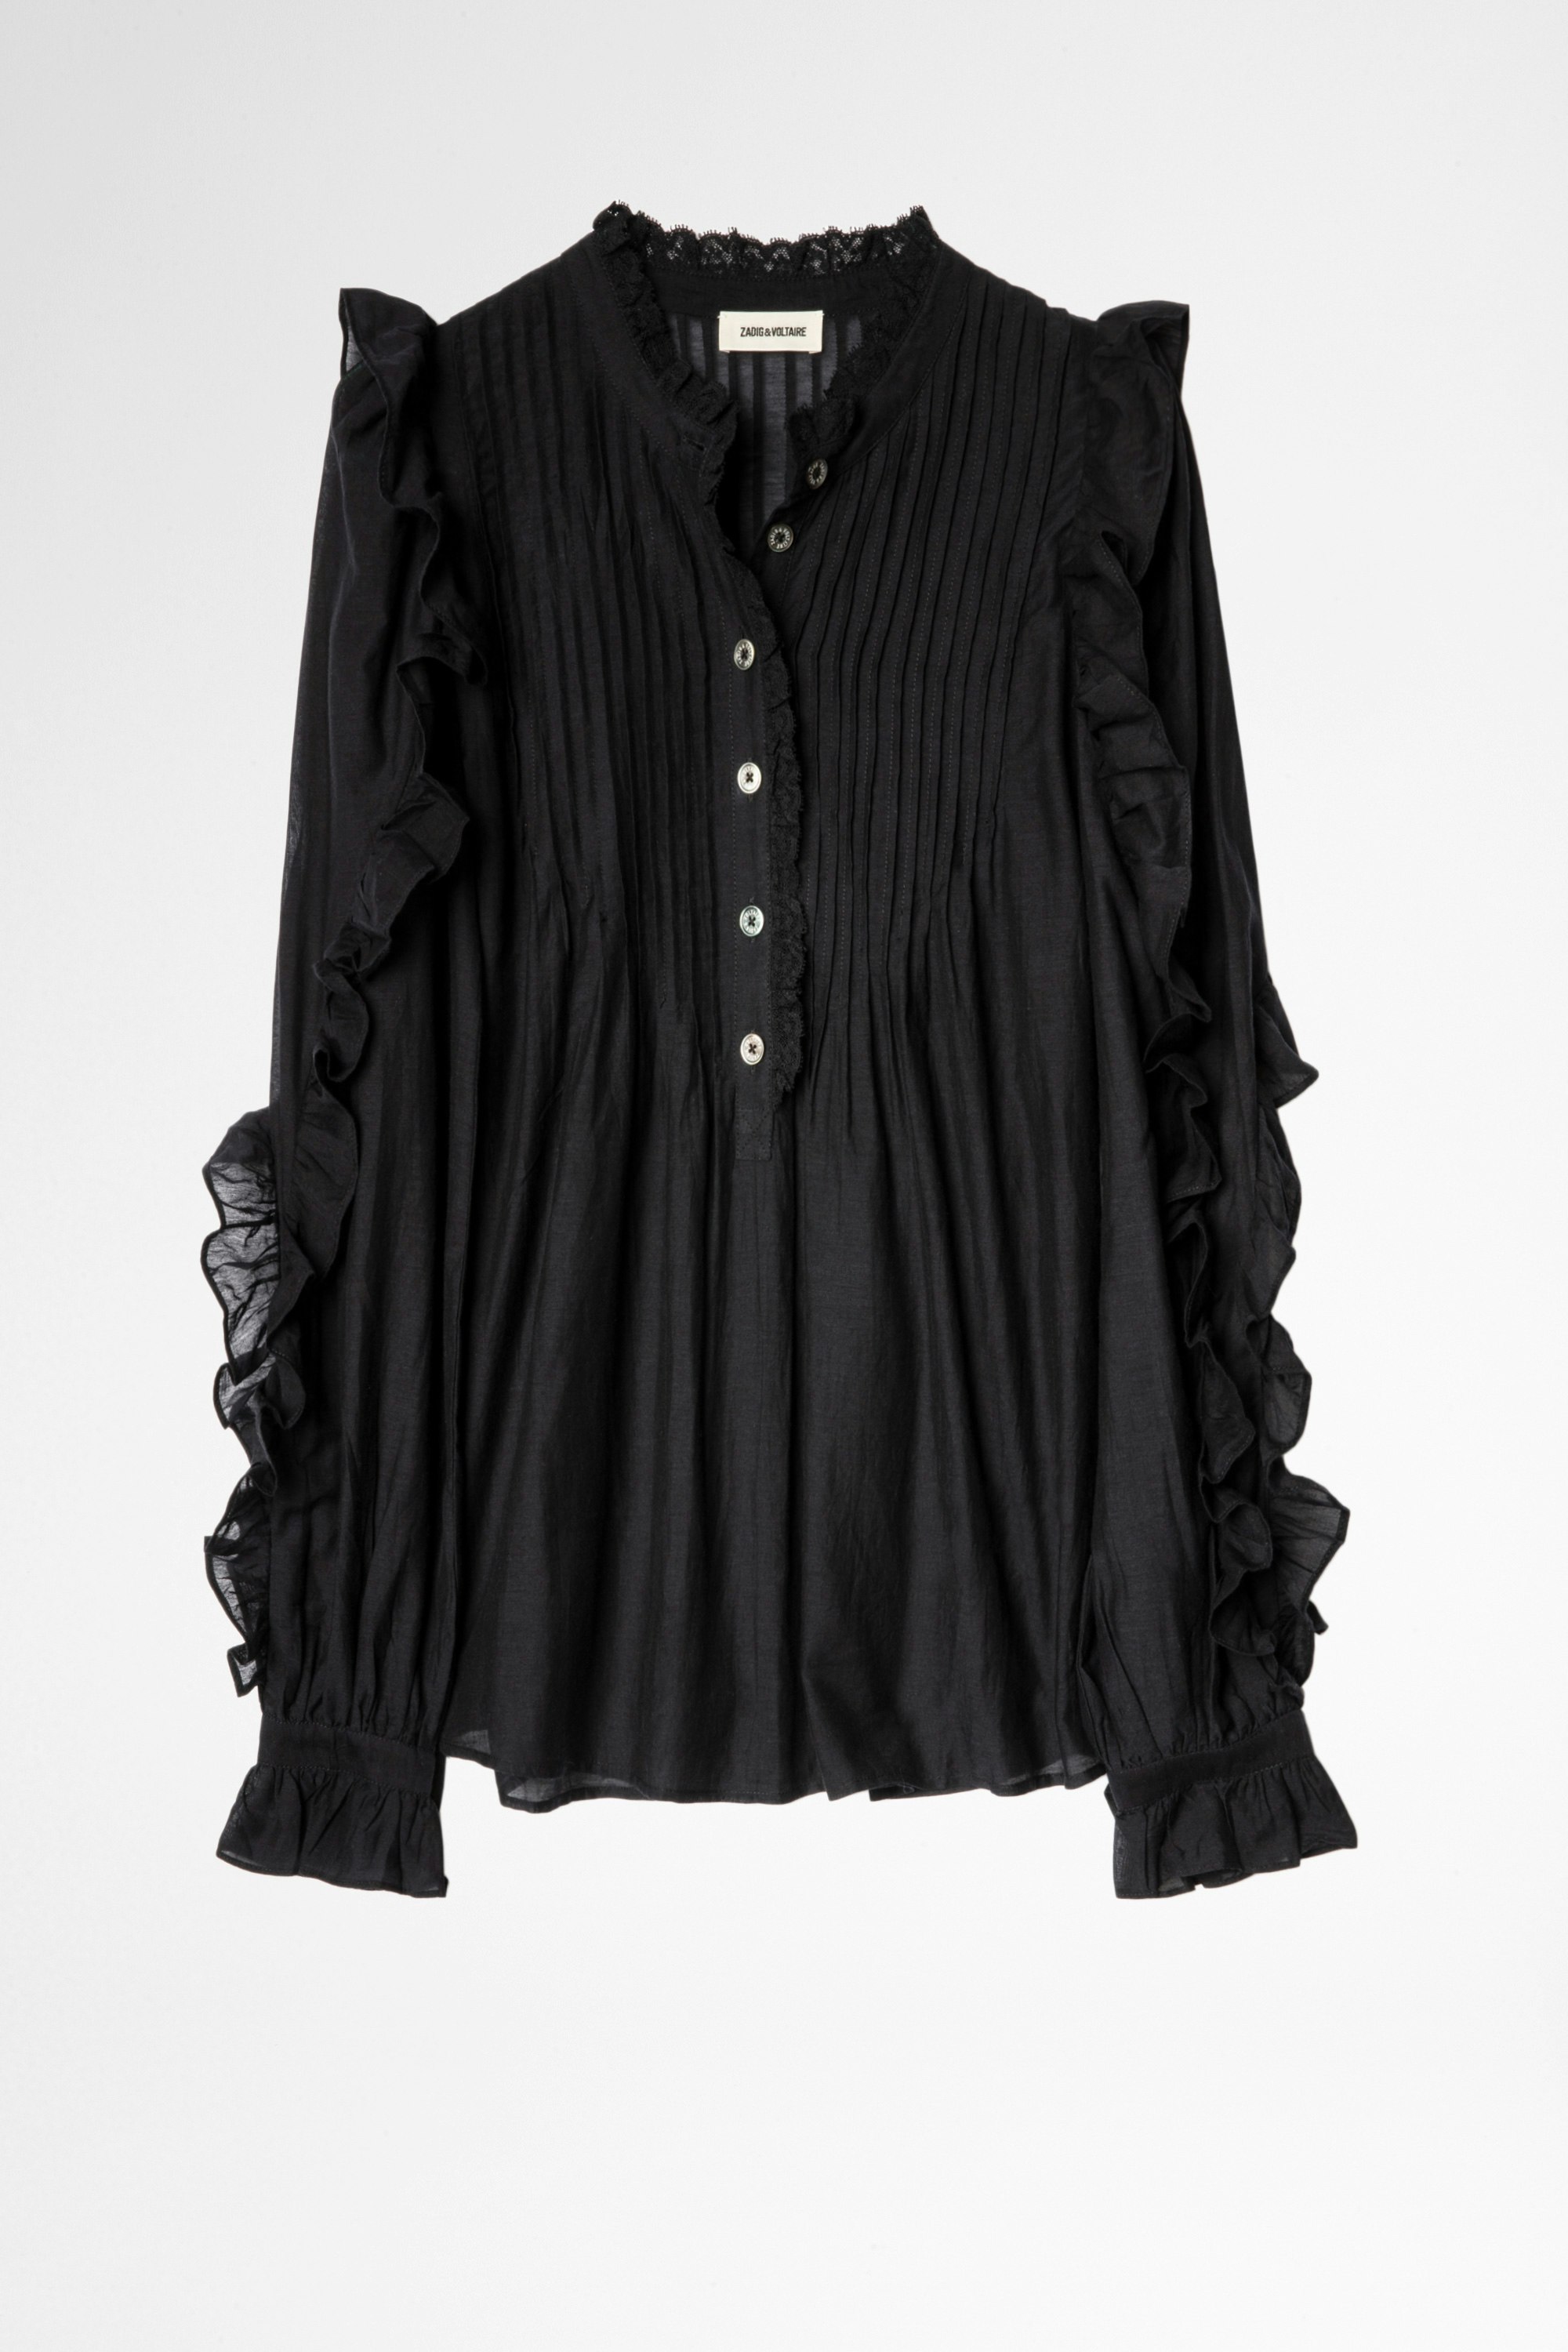 Timmy Tomboy Tunic - Zadig&Voltaire women's  black cotton tunic.